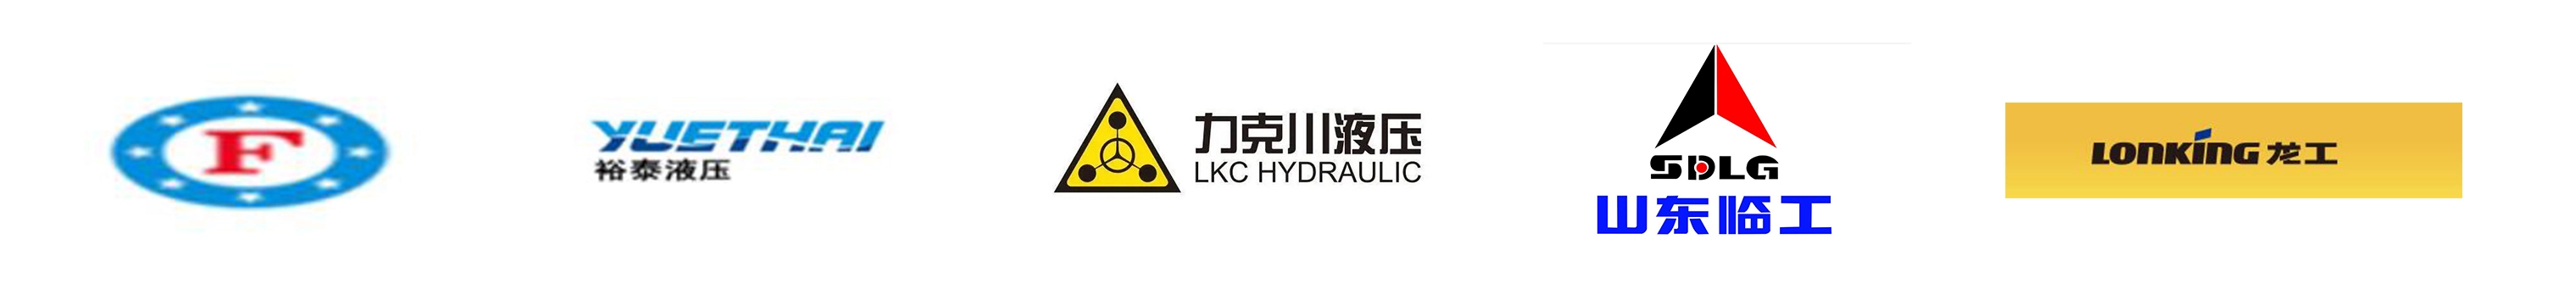 hydraulic check valve manufacturer partner